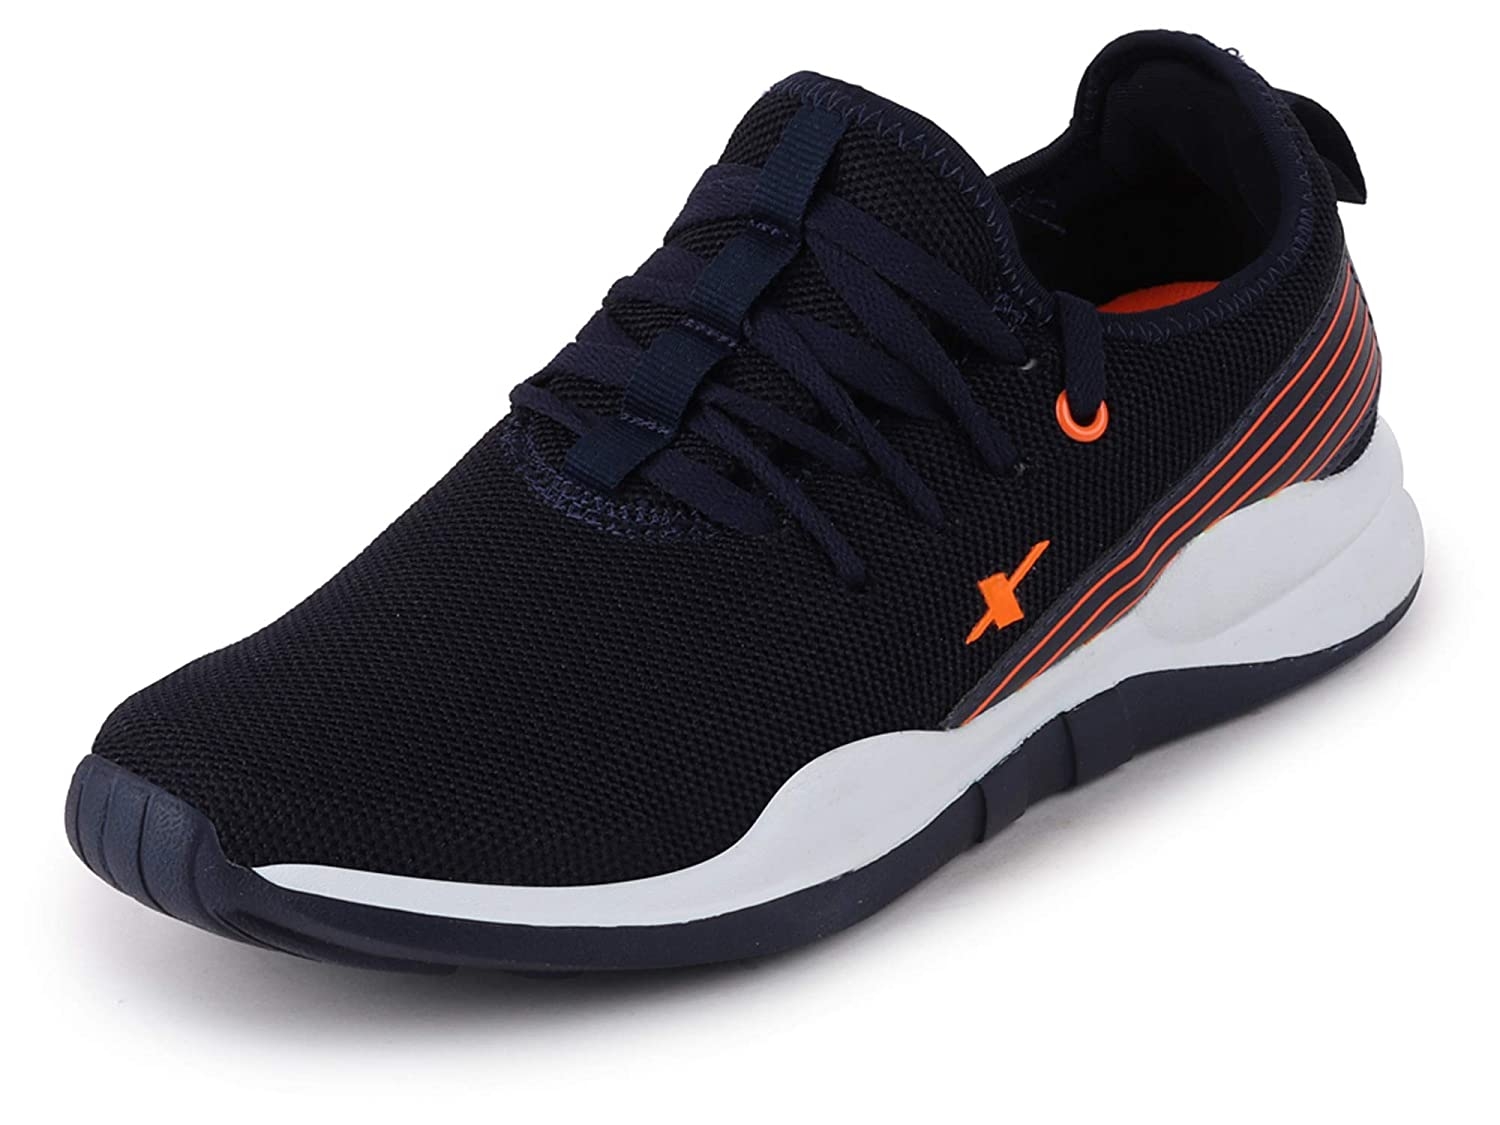 Sparx | Sparx Men Sport shoe